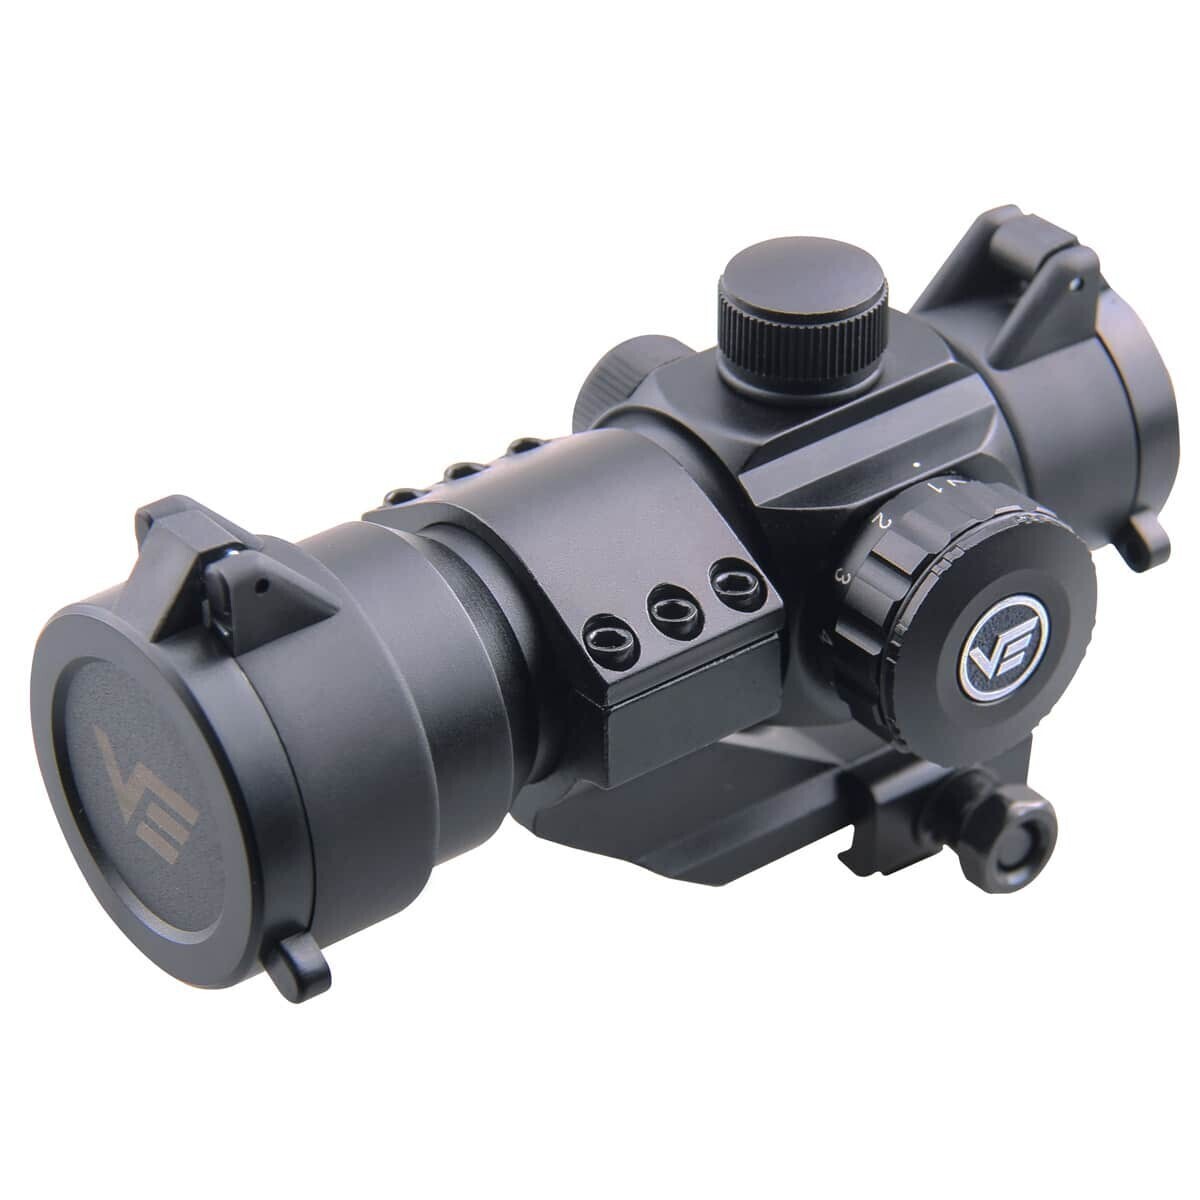 Vector Optics Stinger 1x28 Red Dot Sight